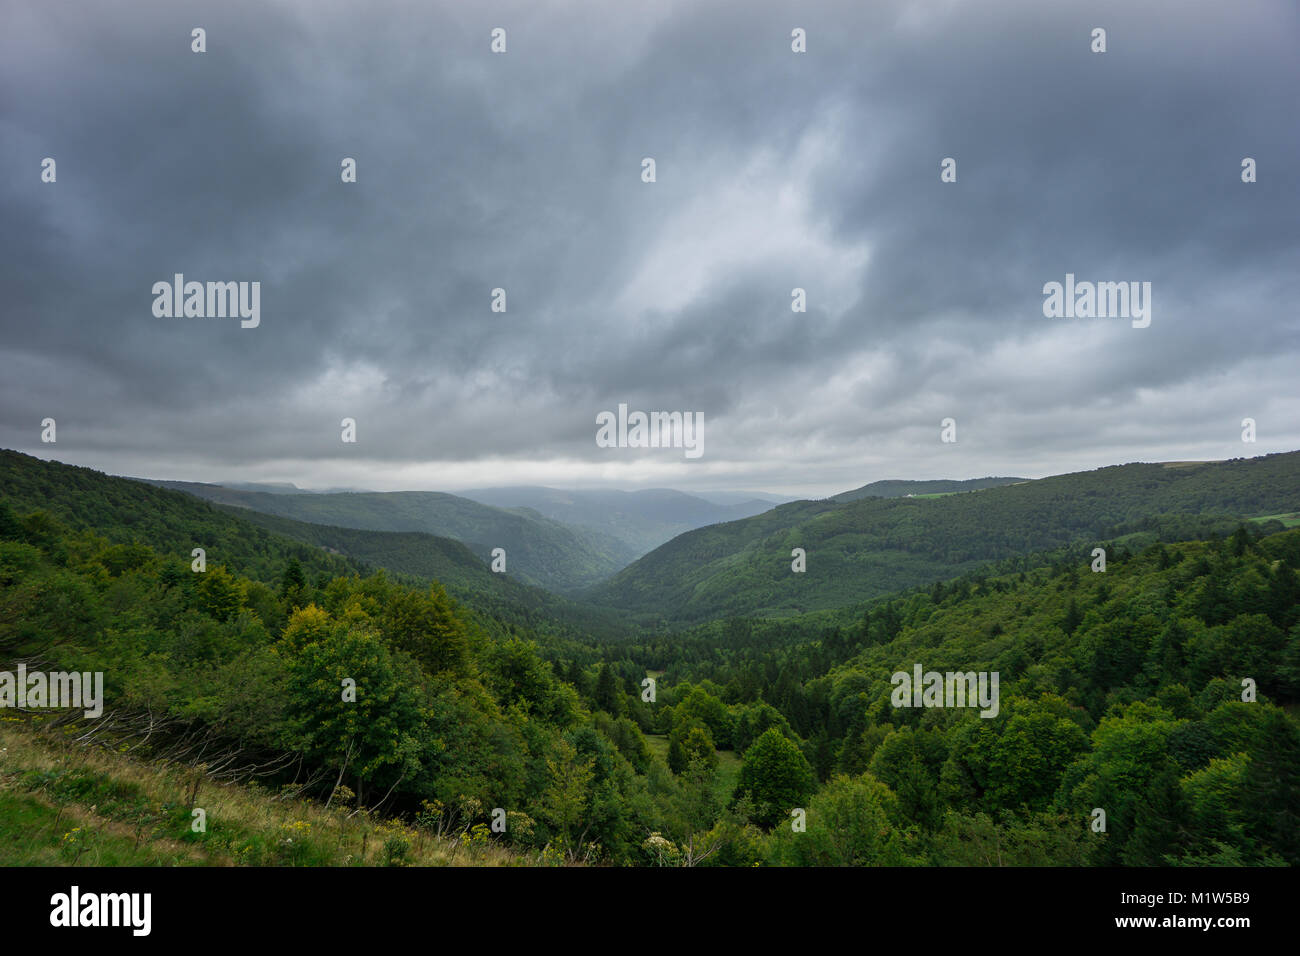 Francia - valle entre montañas boscosas de francés en Alsacia Vosges Foto de stock